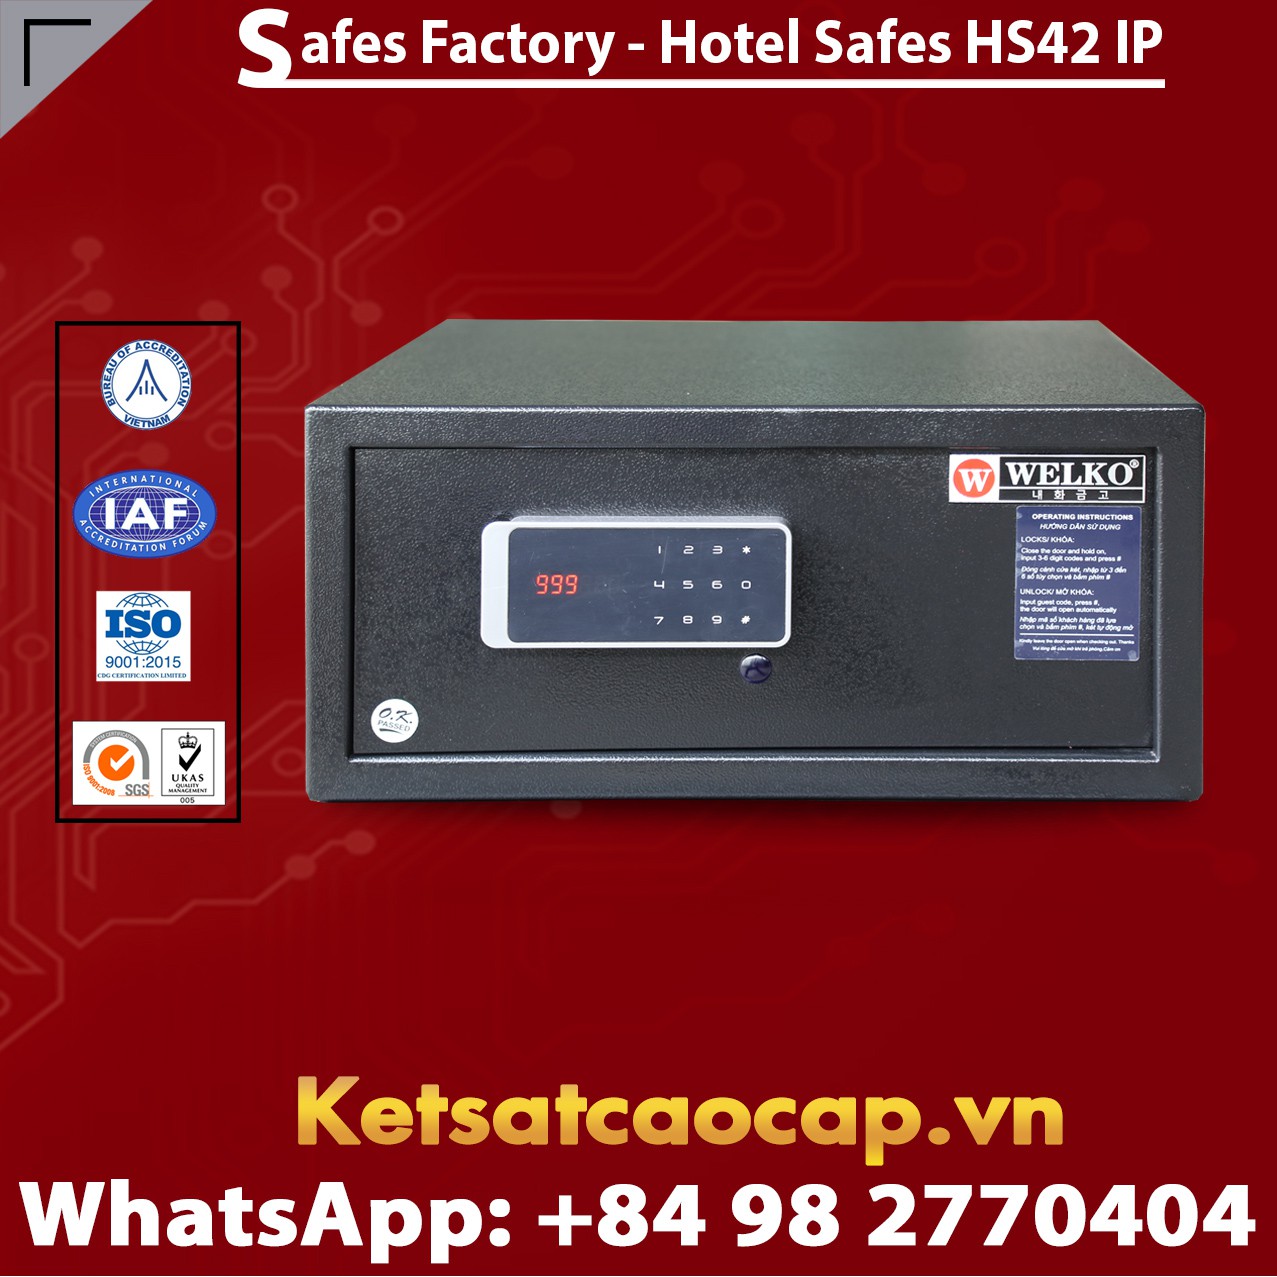 Safes in Hotel WELKO HS42 IP